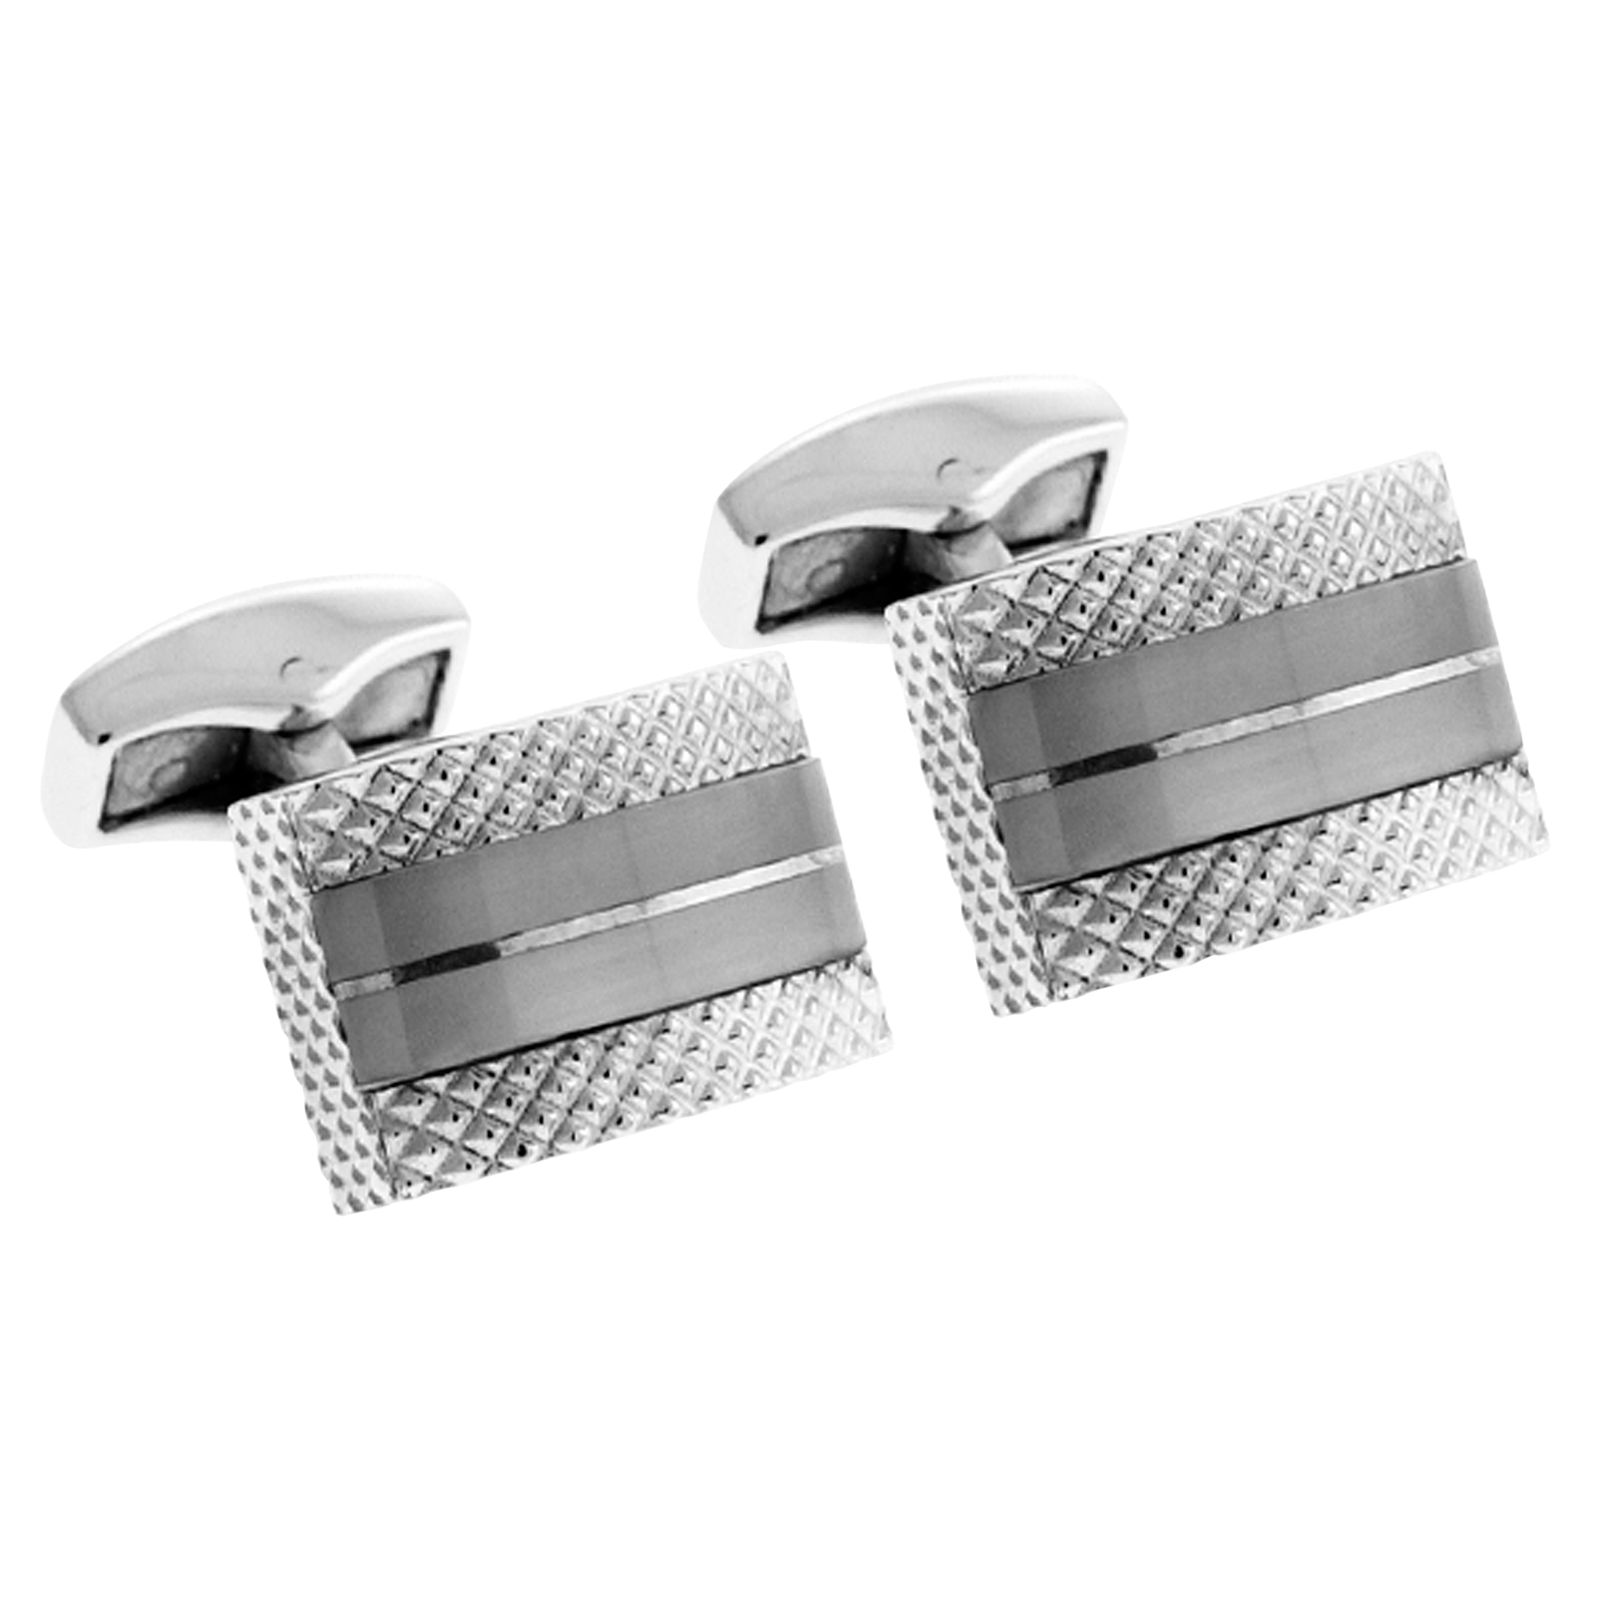 Tateossian Etched D-Shape Cufflinks, Grey/Silver